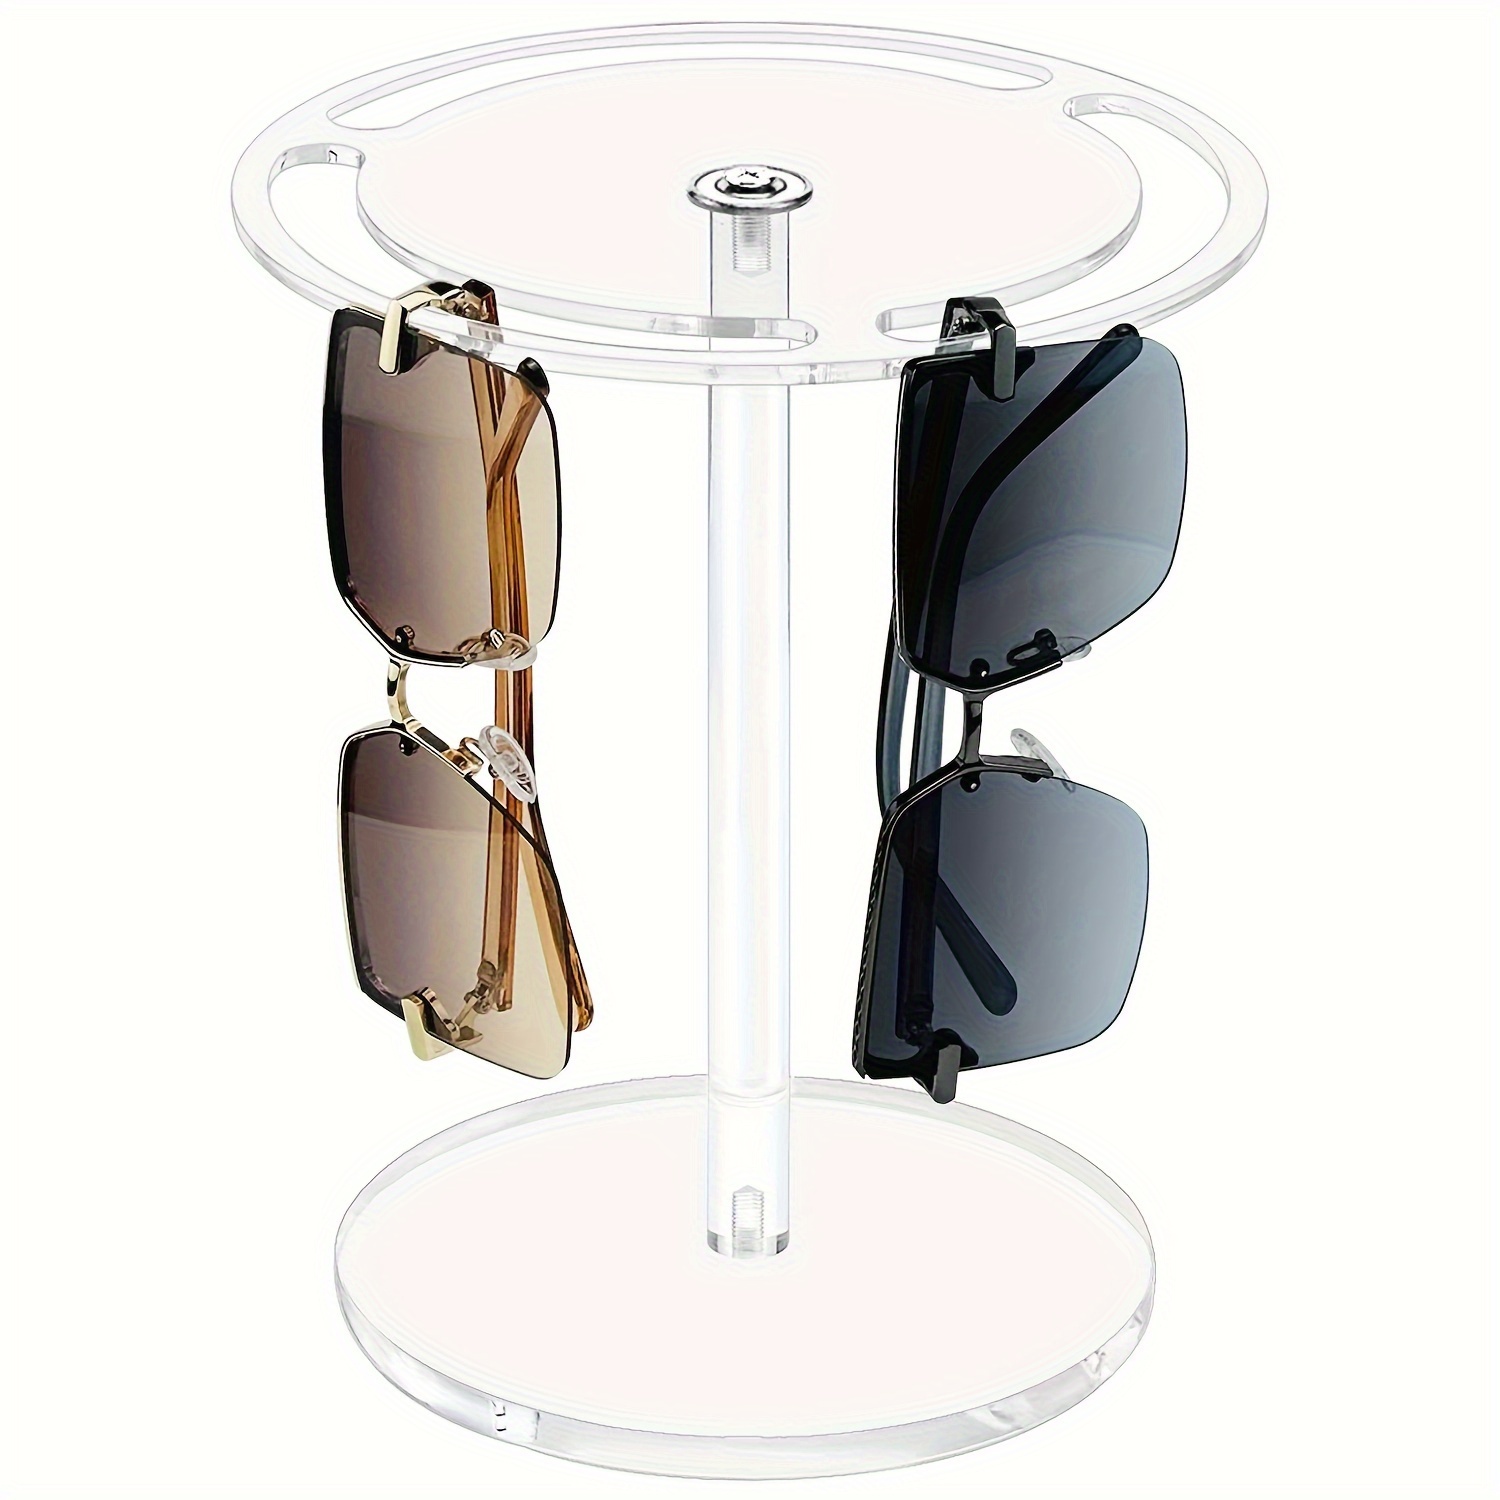  Expositor de lentes de sol ensamblable, 5 capas, práctico  soporte de gafas de sol para mostrar lentes de sol, marco de moda, estante  de exhibición de joyas (color: 3) : Hogar